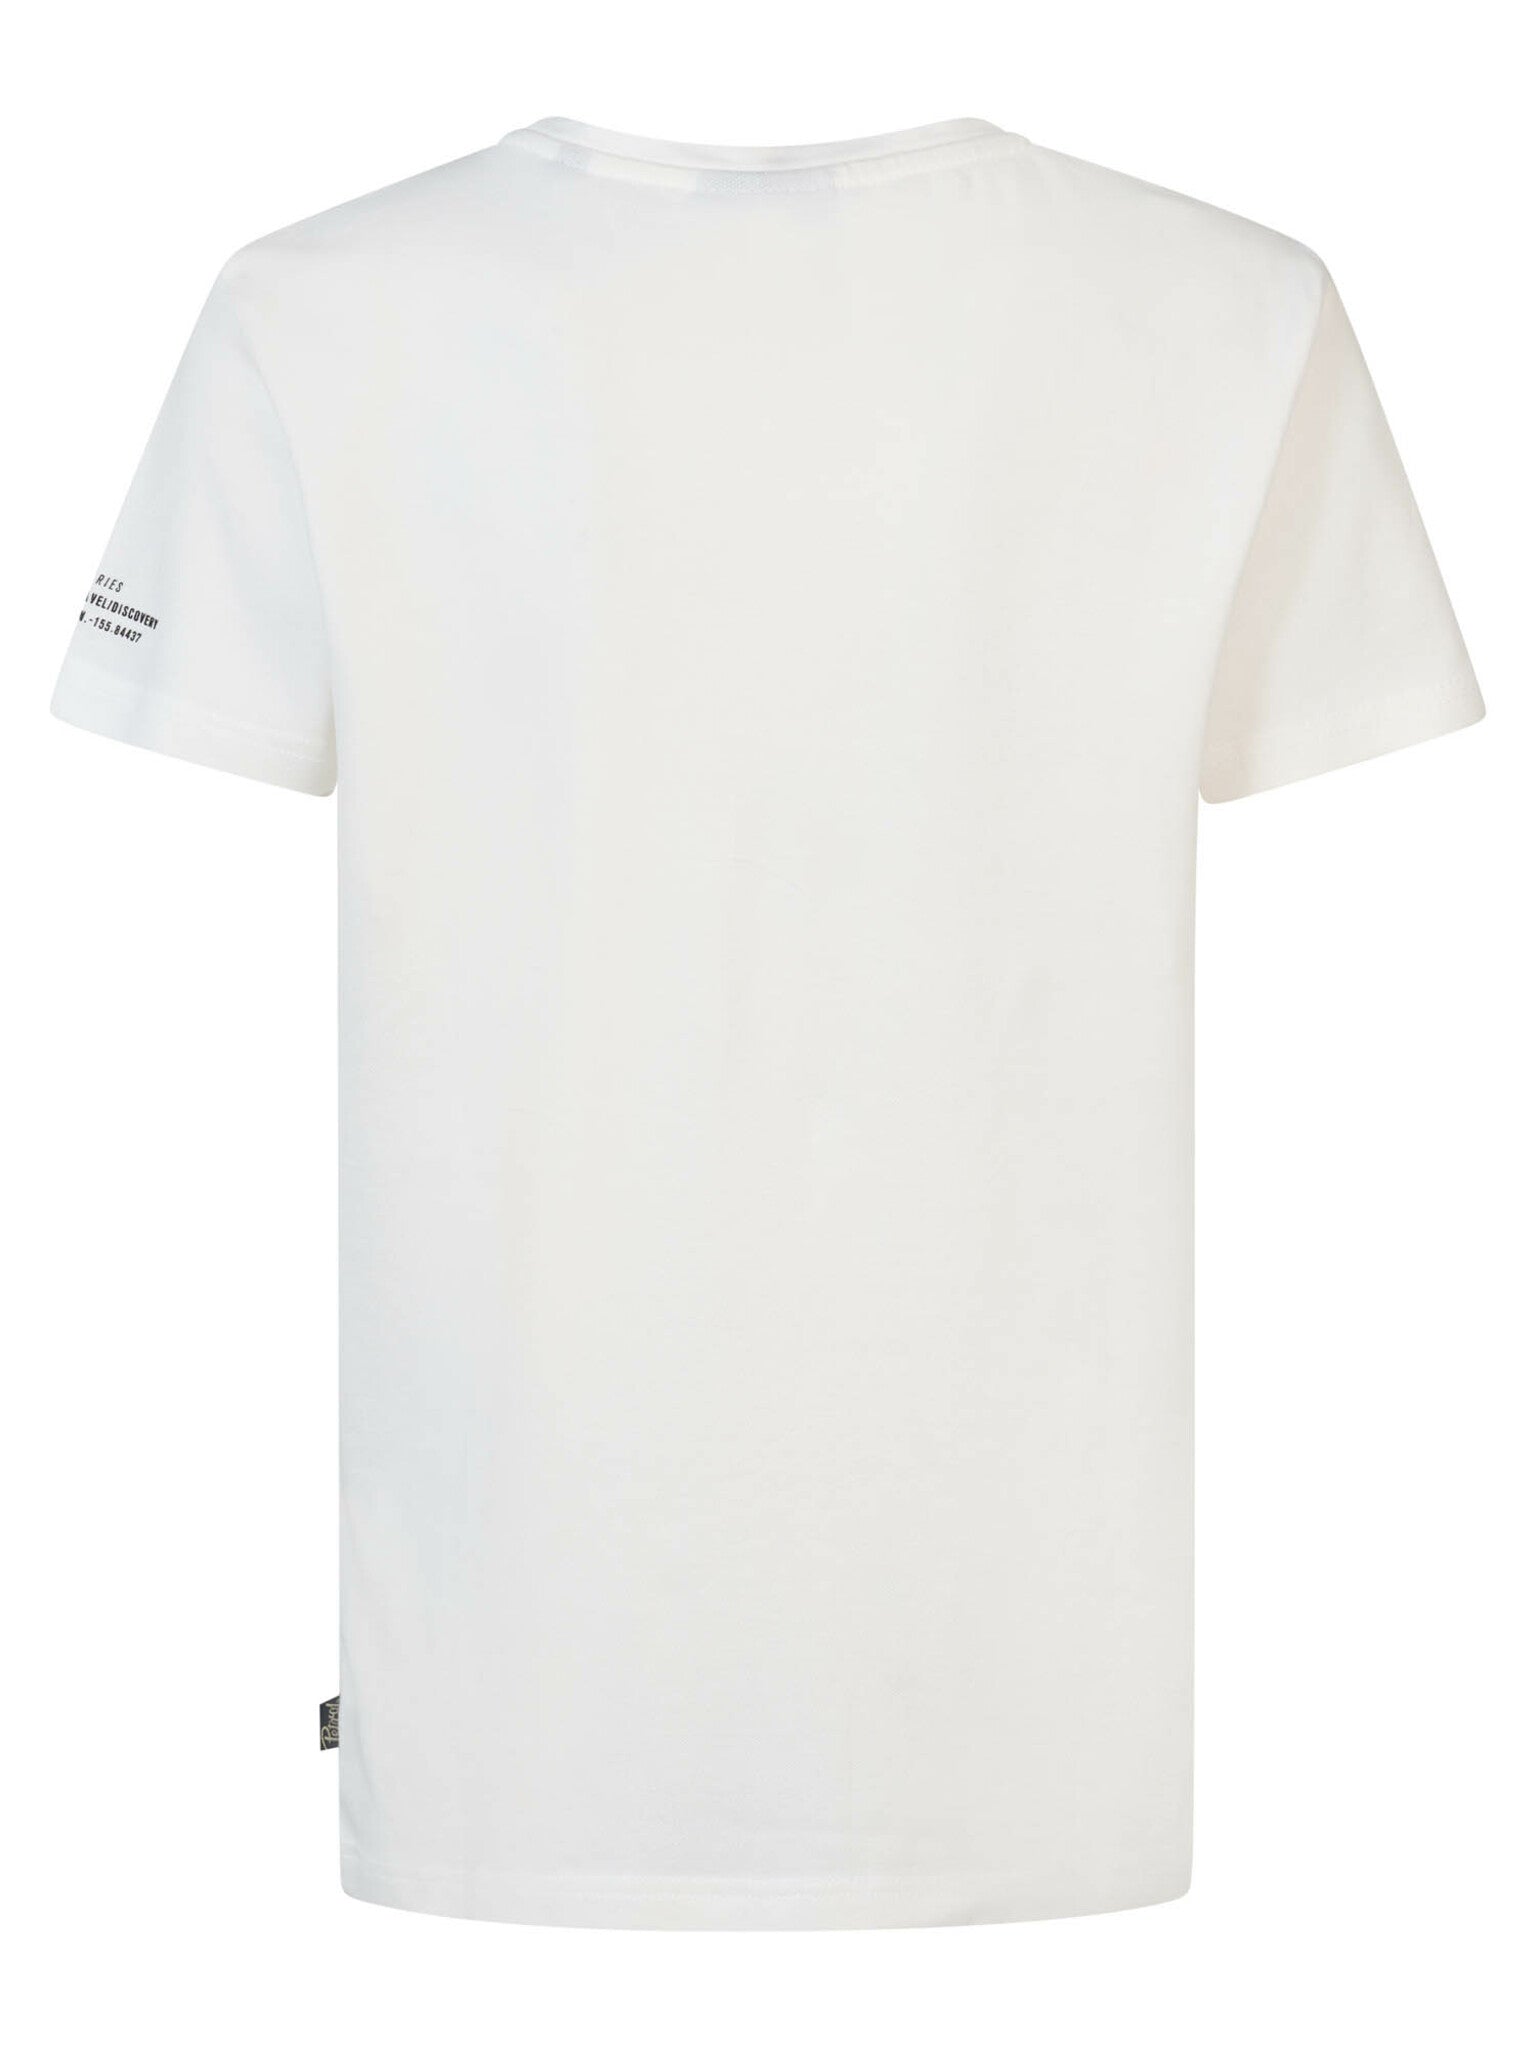 Jongens Boys T-Shirt SS van Petrol in de kleur Bright White in maat 176.